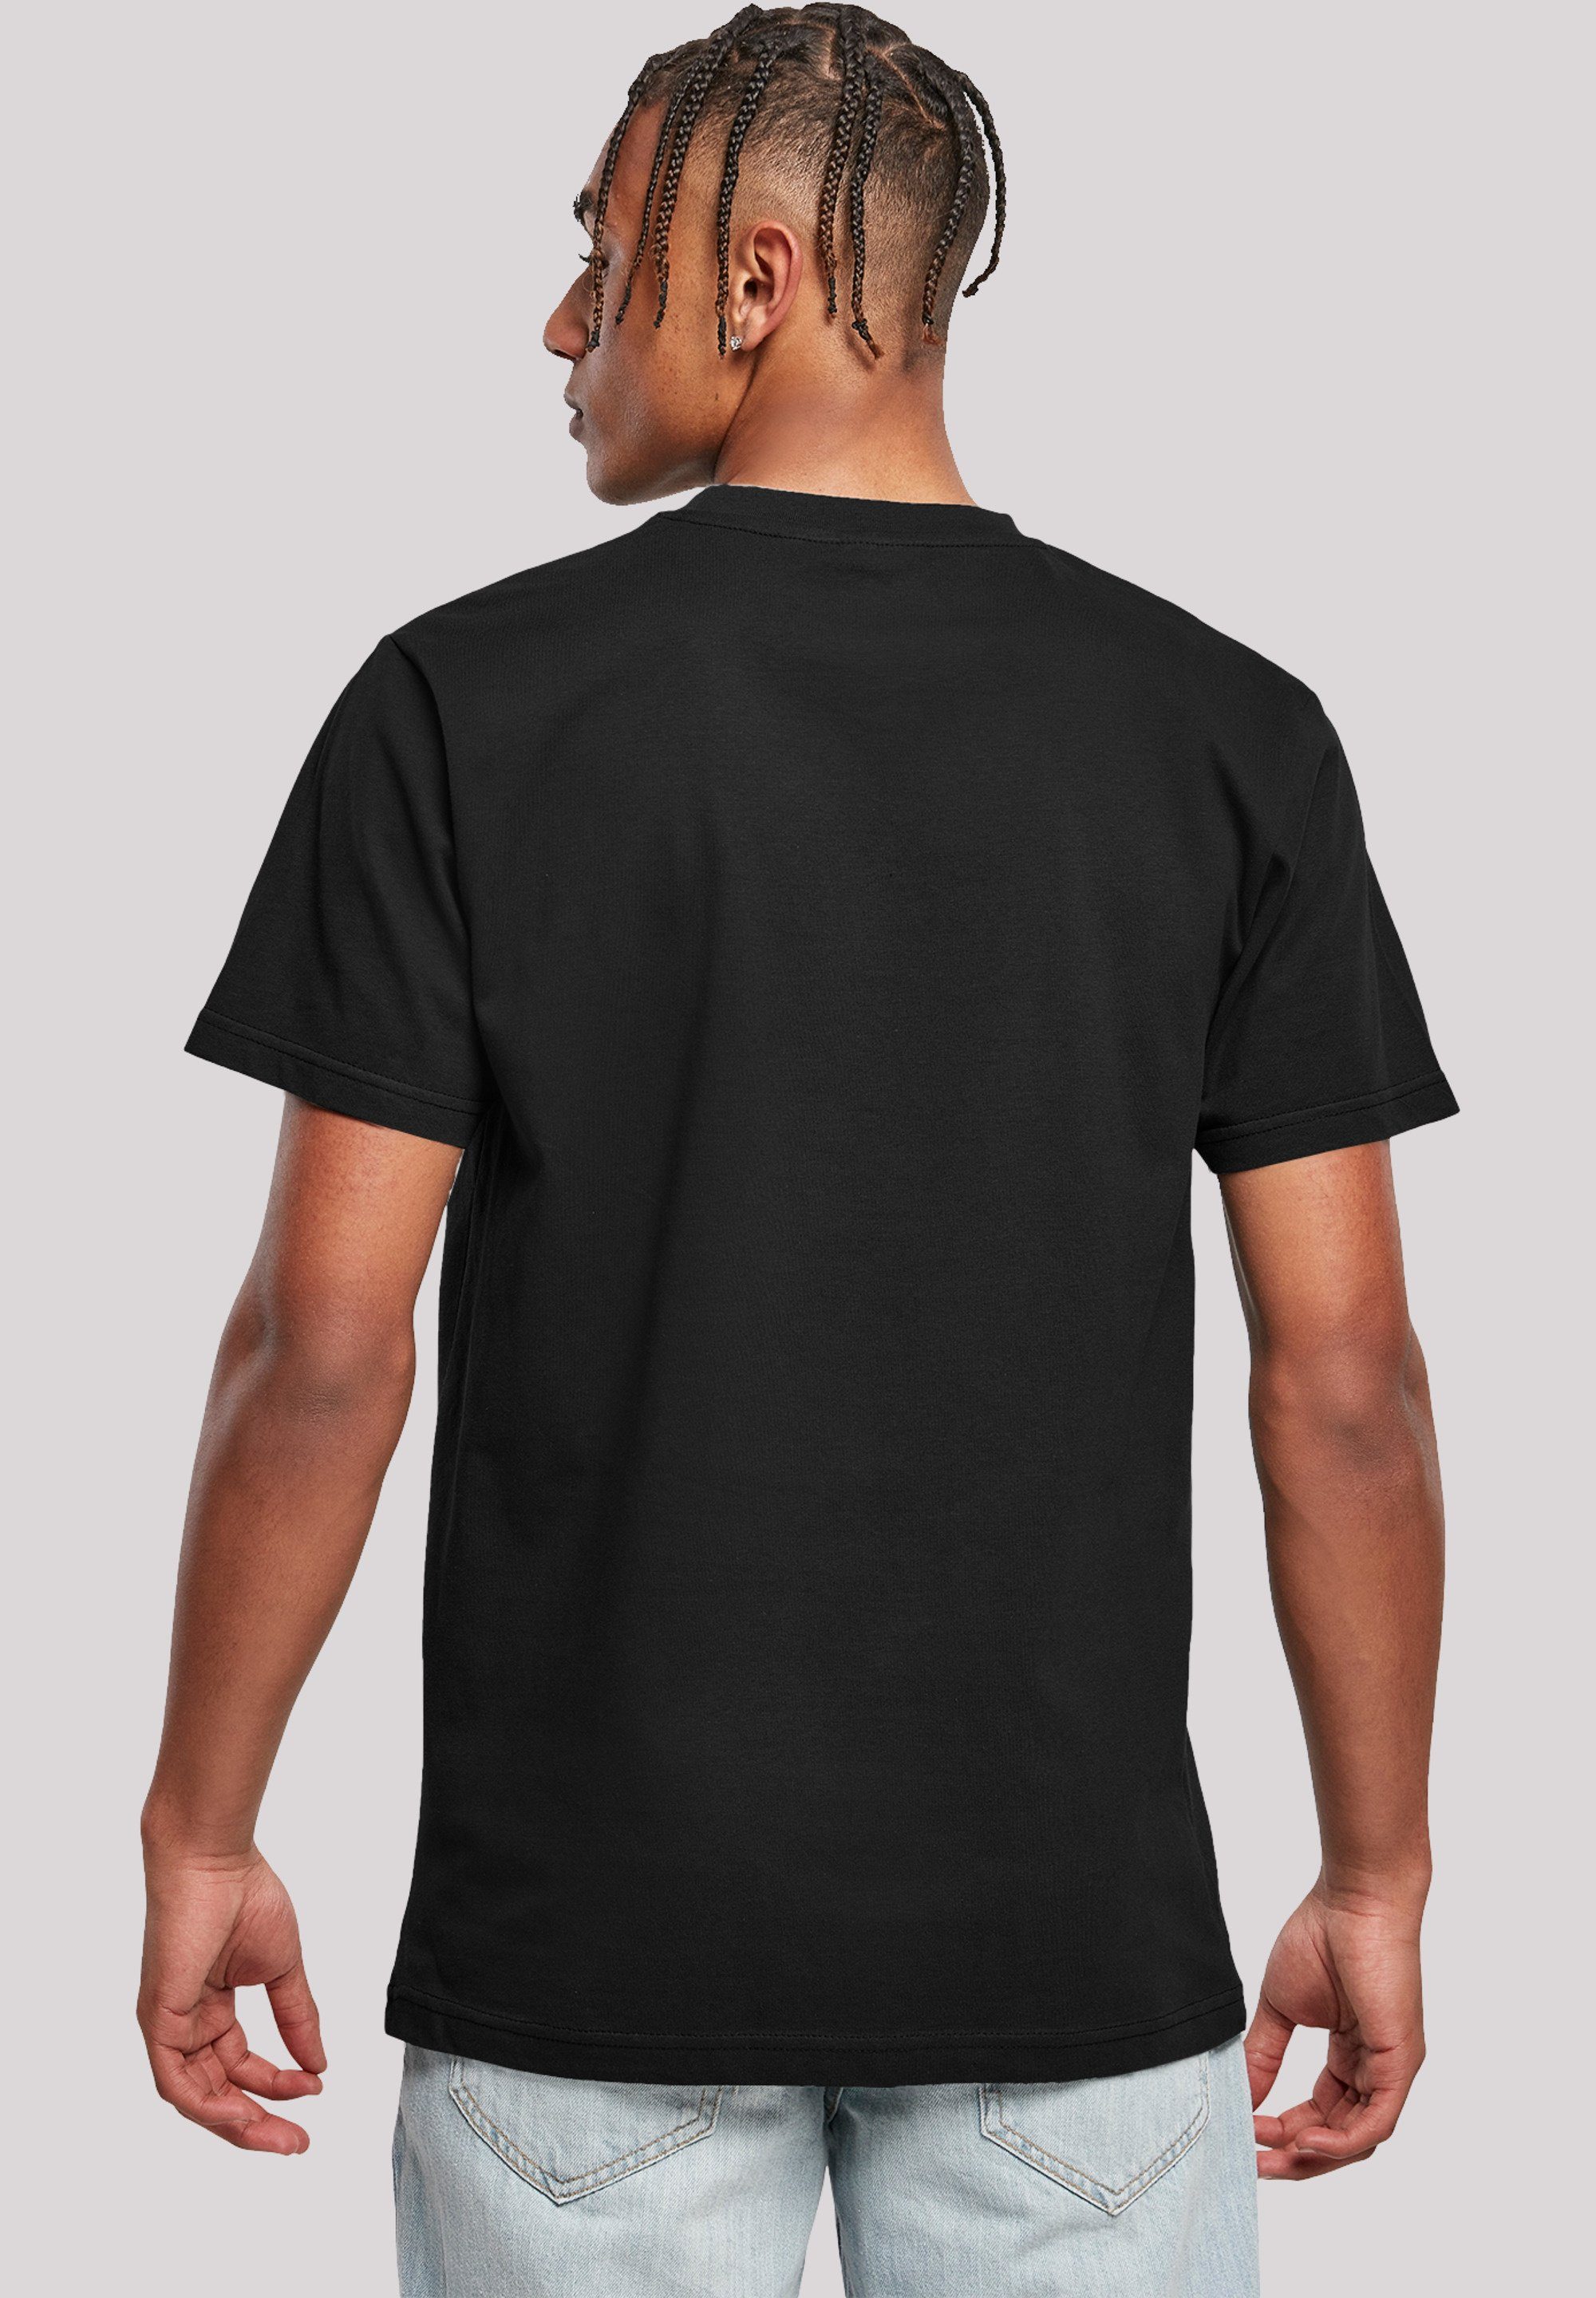 F4NT4STIC T-Shirt Cargo Grogu Precious Das schwarz Mandalorian Wars Merch,Regular-Fit,Basic,Bedruckt Kind Herren,Premium Star